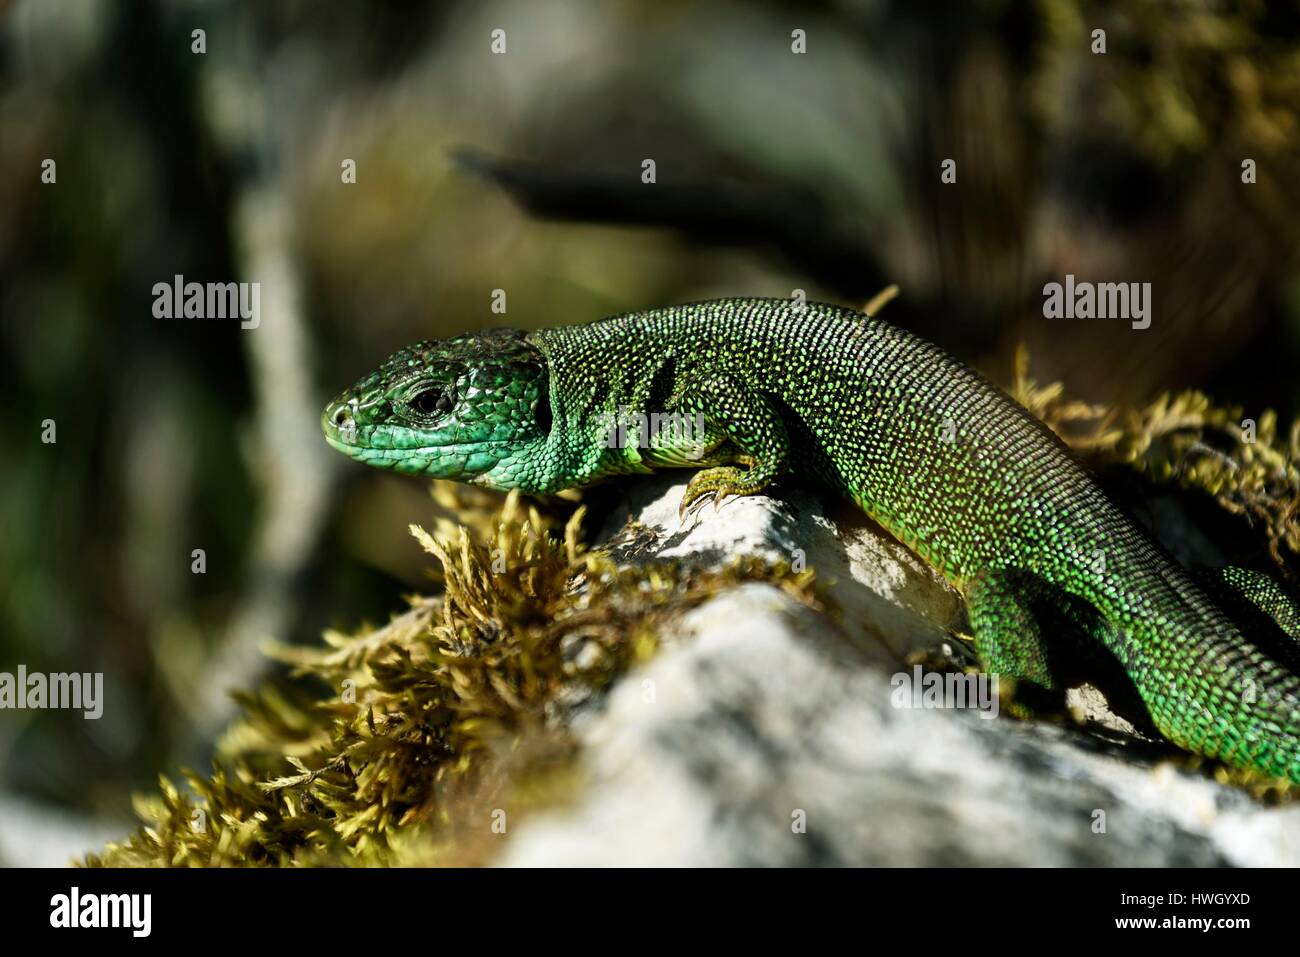 France, Haut Rhin, Soultzmatt, colline calcaire, Lézard vert (Lacerta viridis) mâle Stock Photo